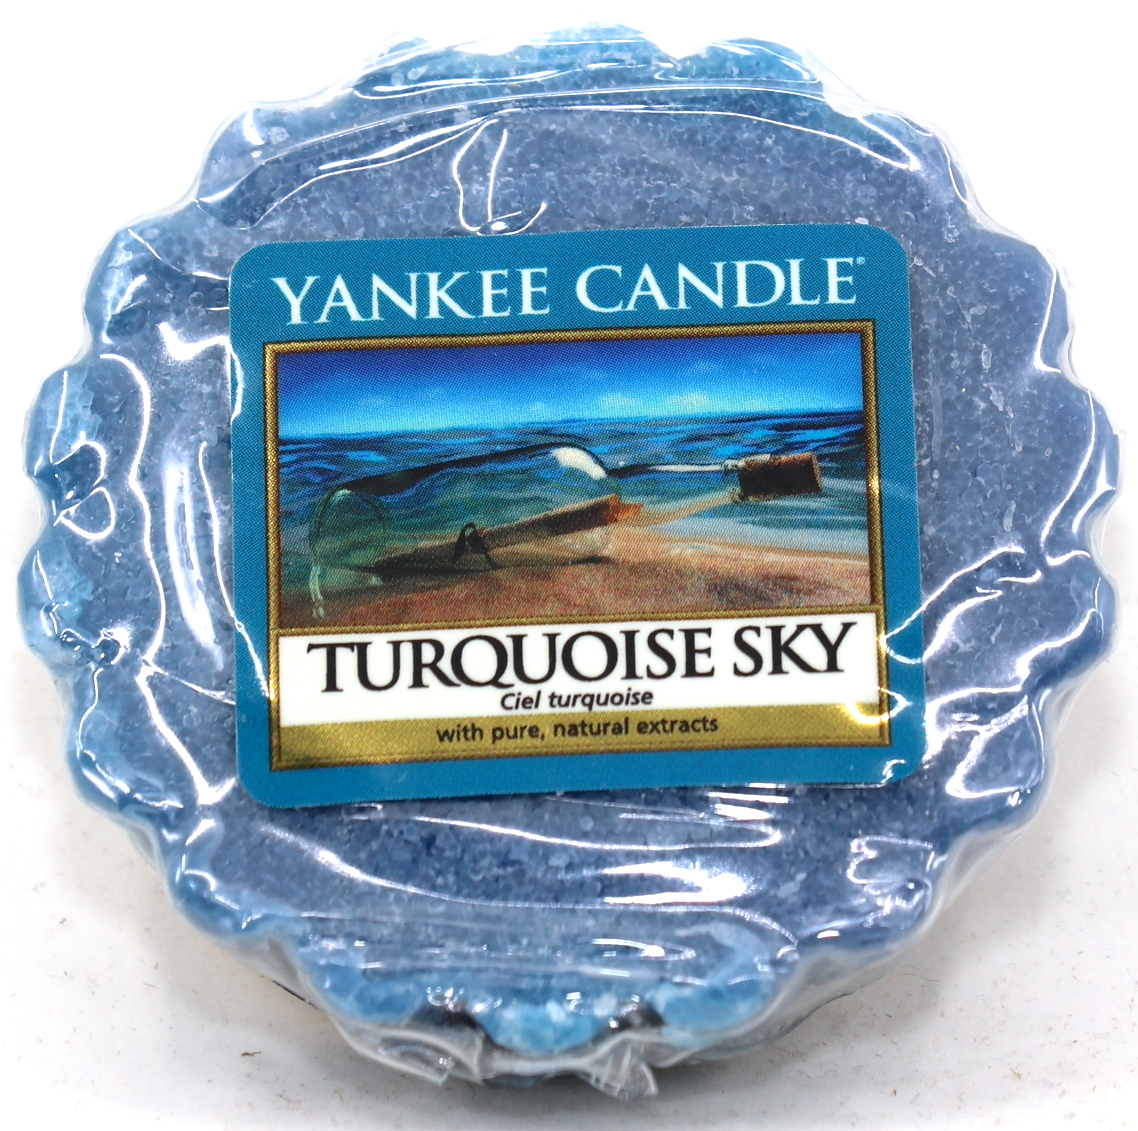 Yankee Candle Turquoise Sky Tart